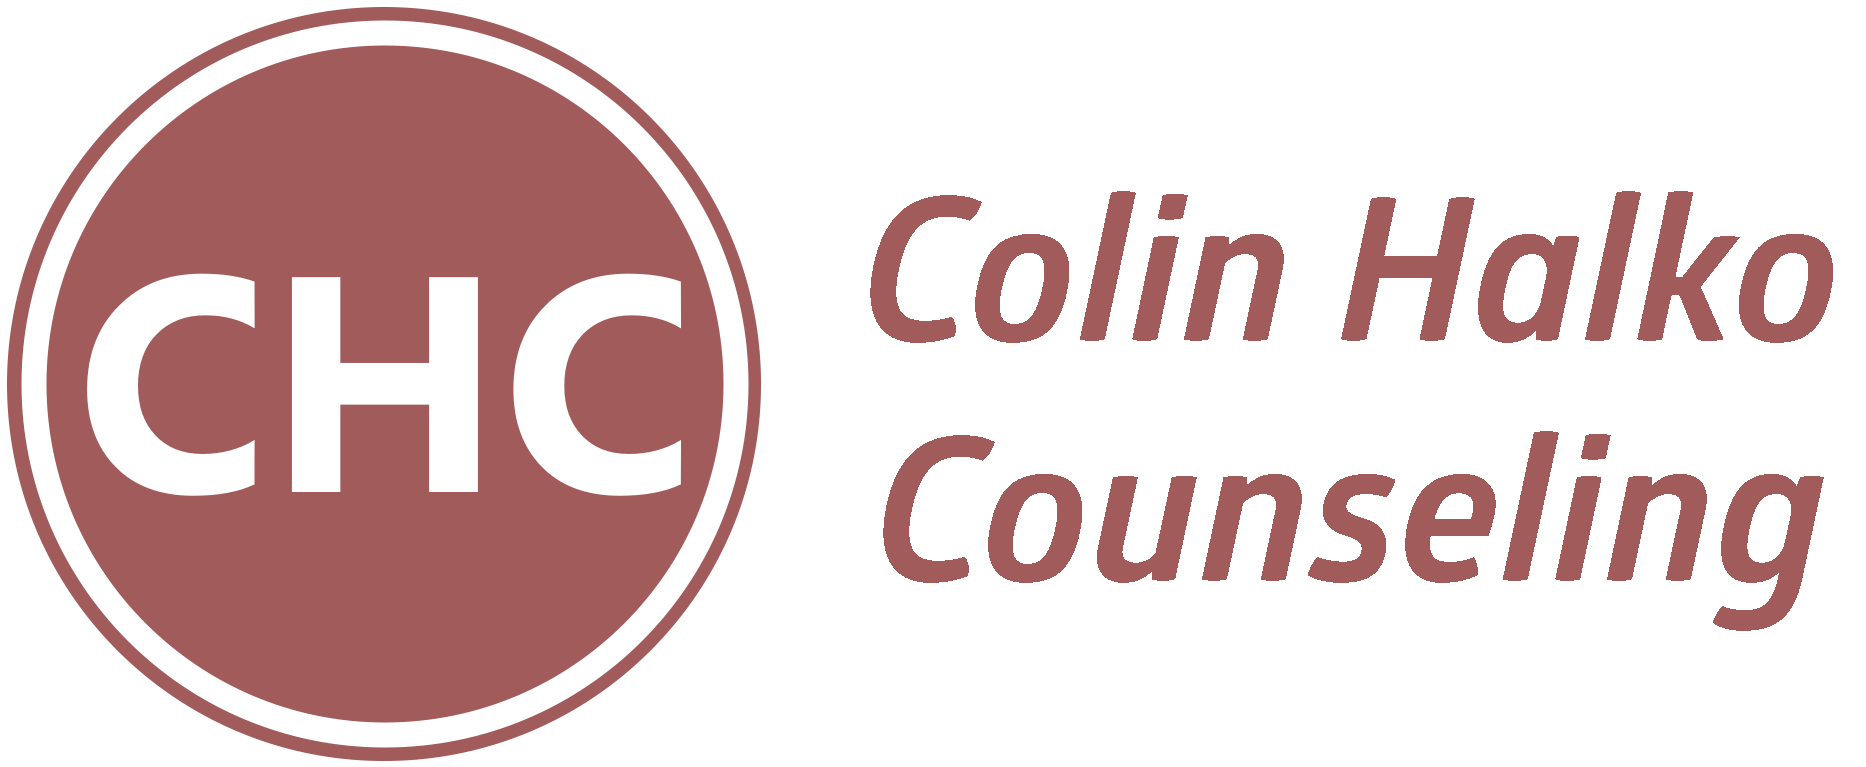 Colin Halko Counseling LLC